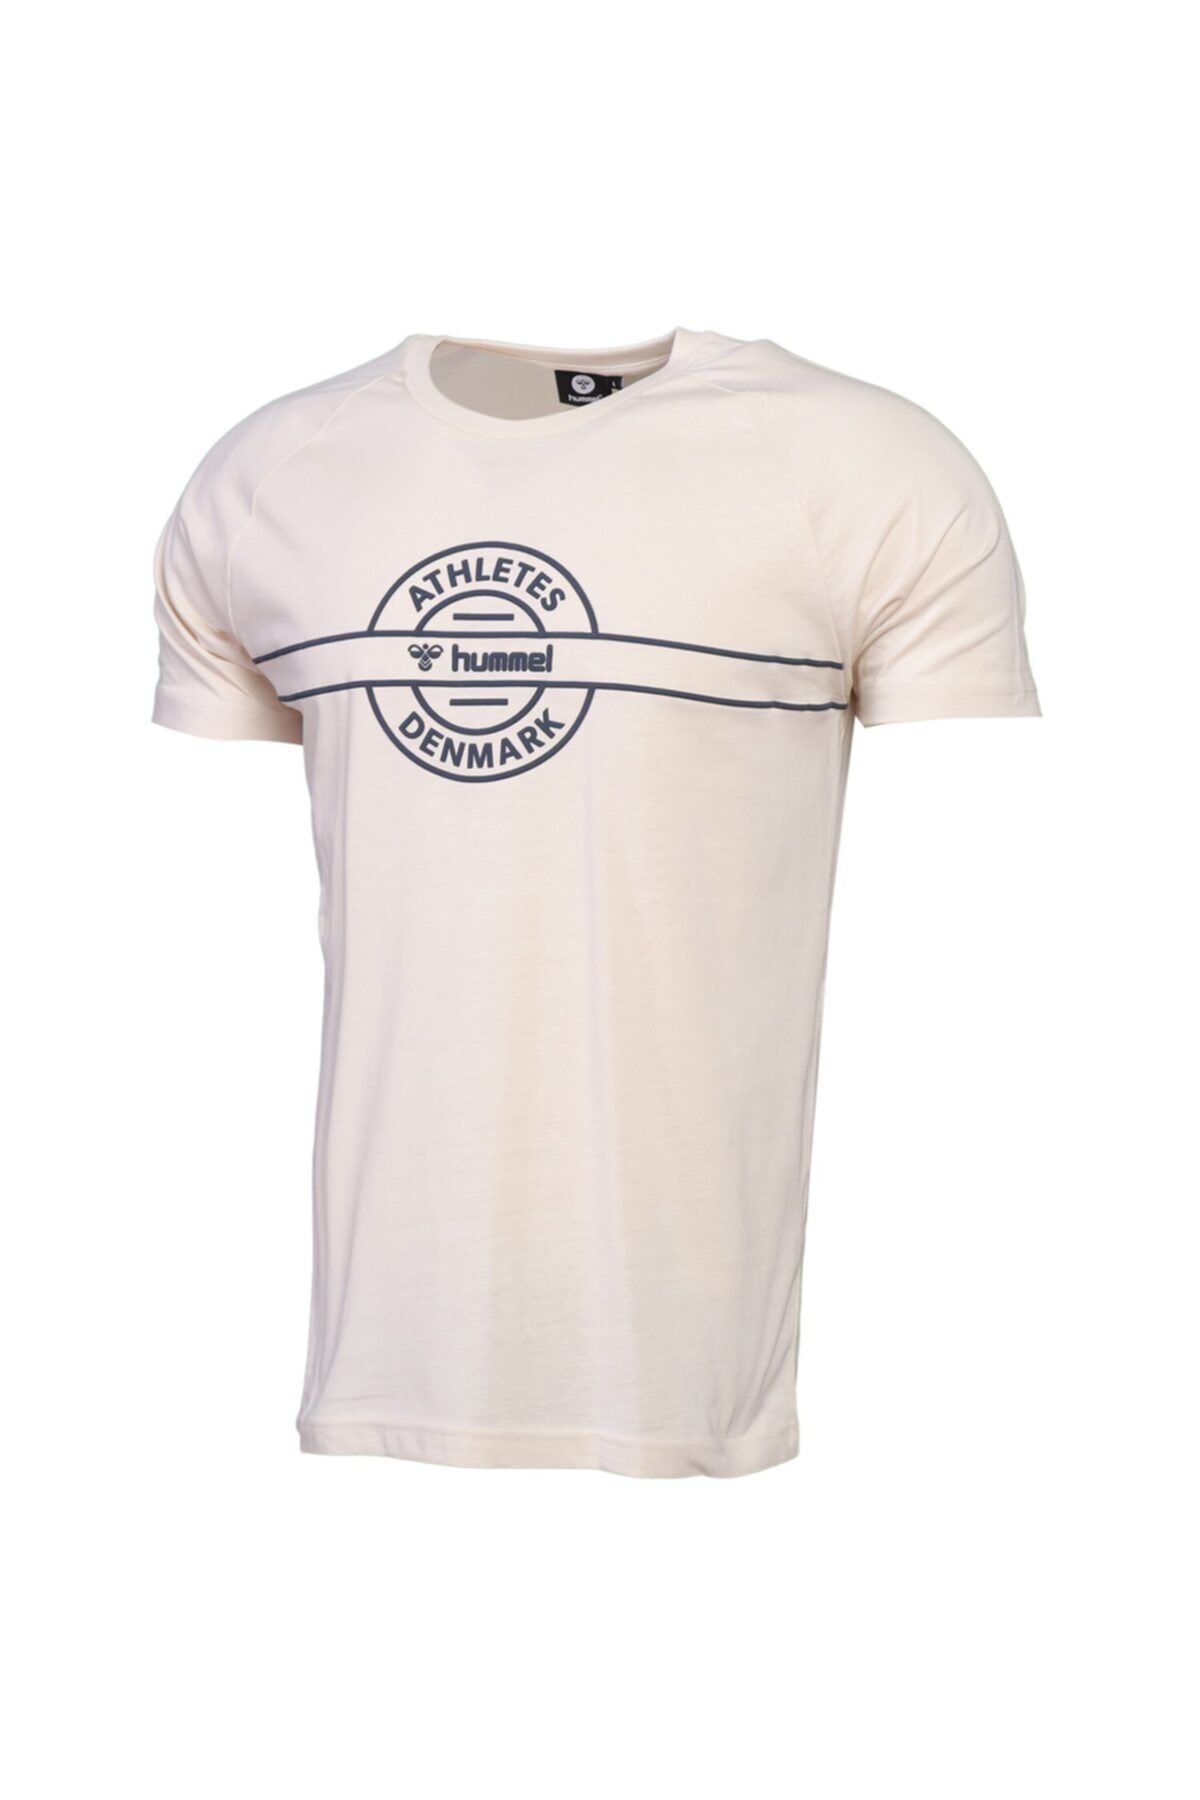 hummel Erkek Beyaz Arrow T-shirt